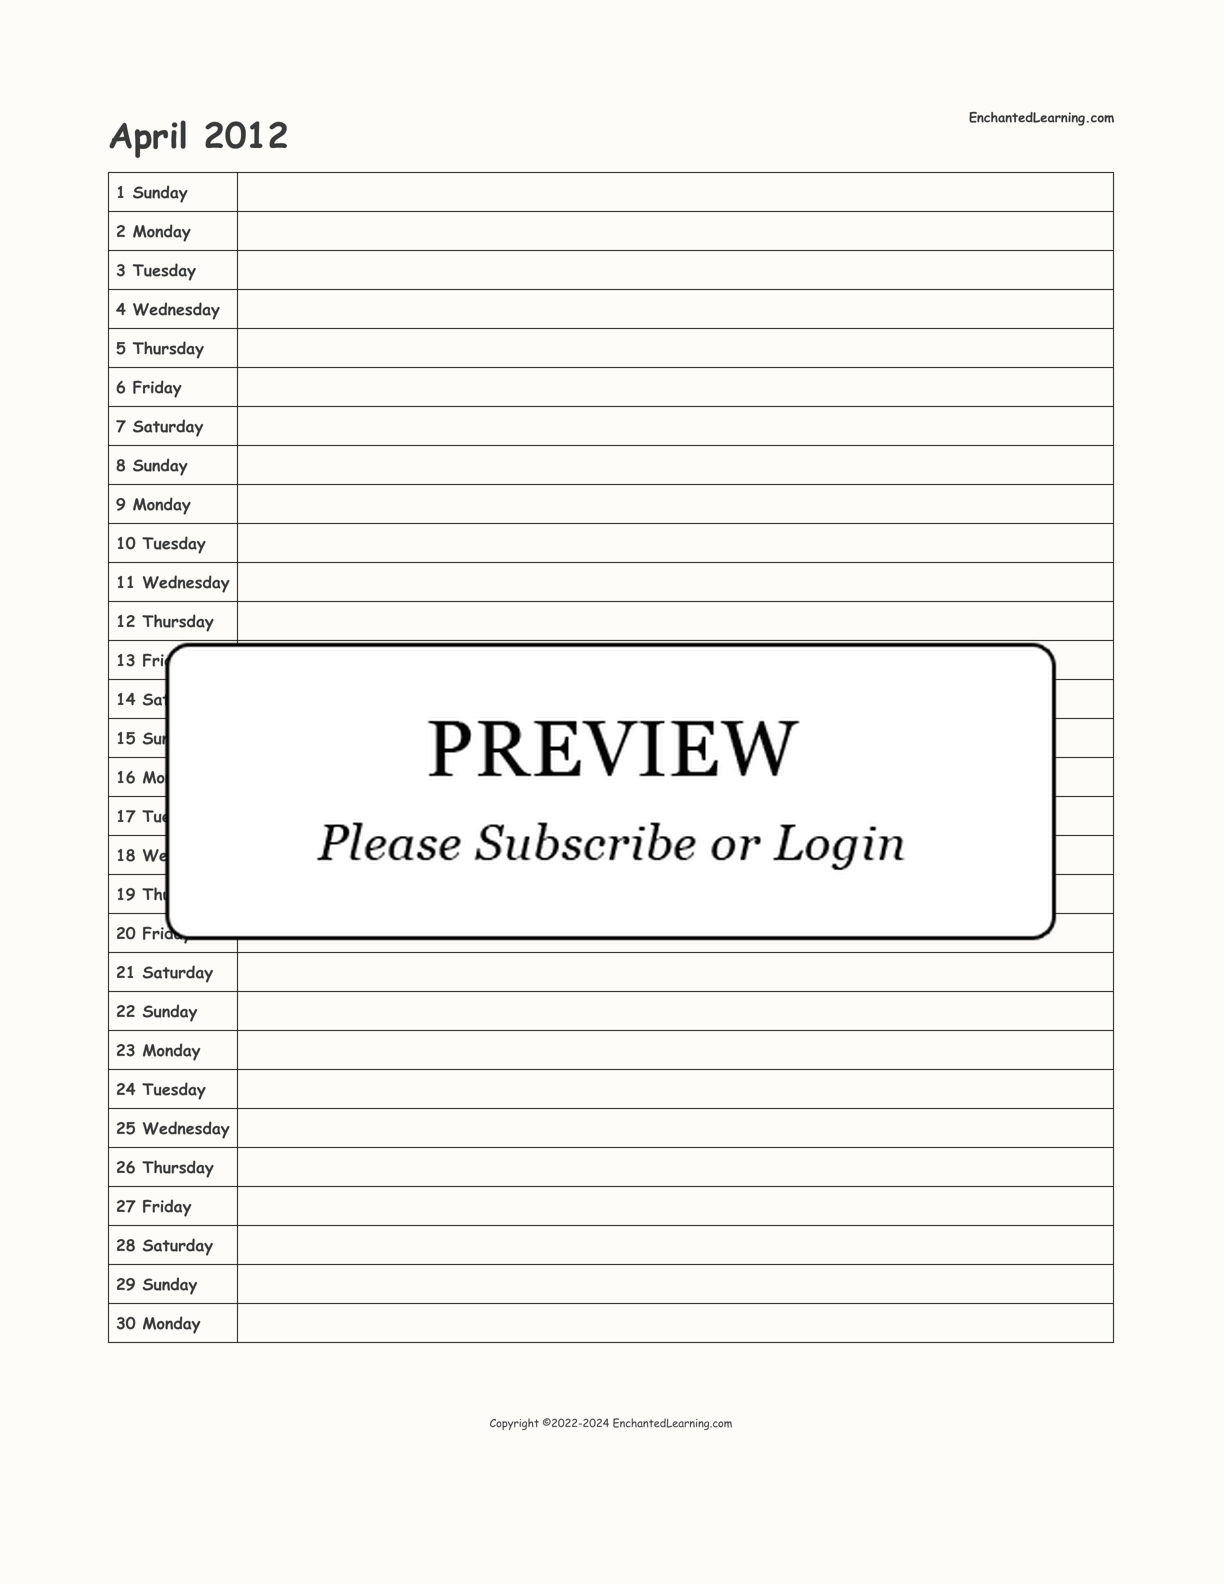 April 2012 Calendar interactive printout page 1